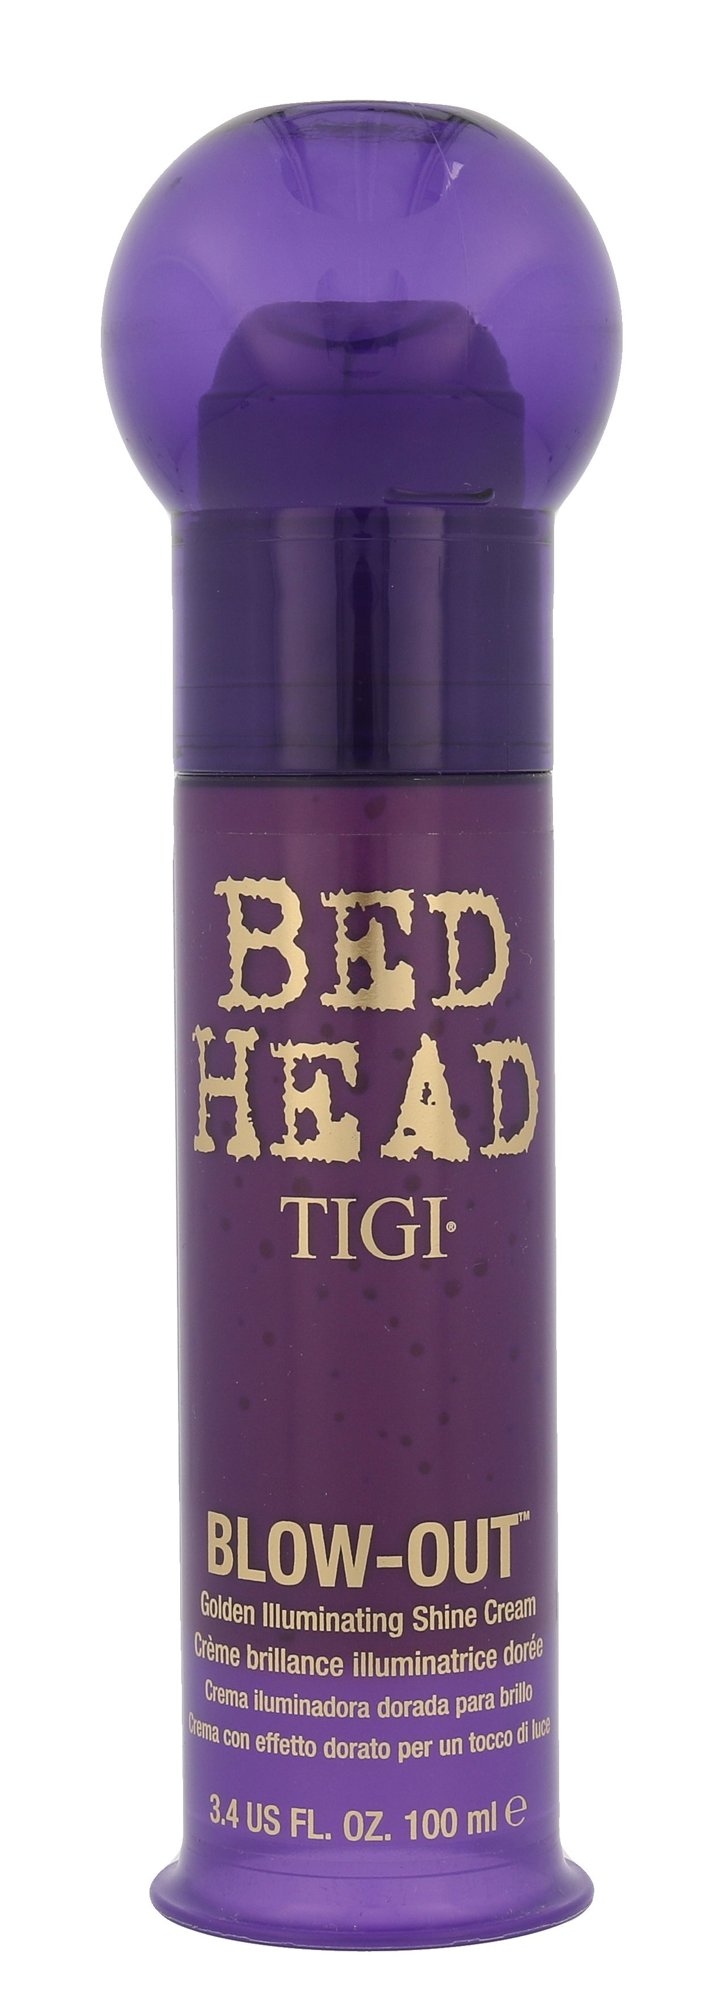 Tigi Bed Head Blow-Out Golden Illuminating Shine Cream